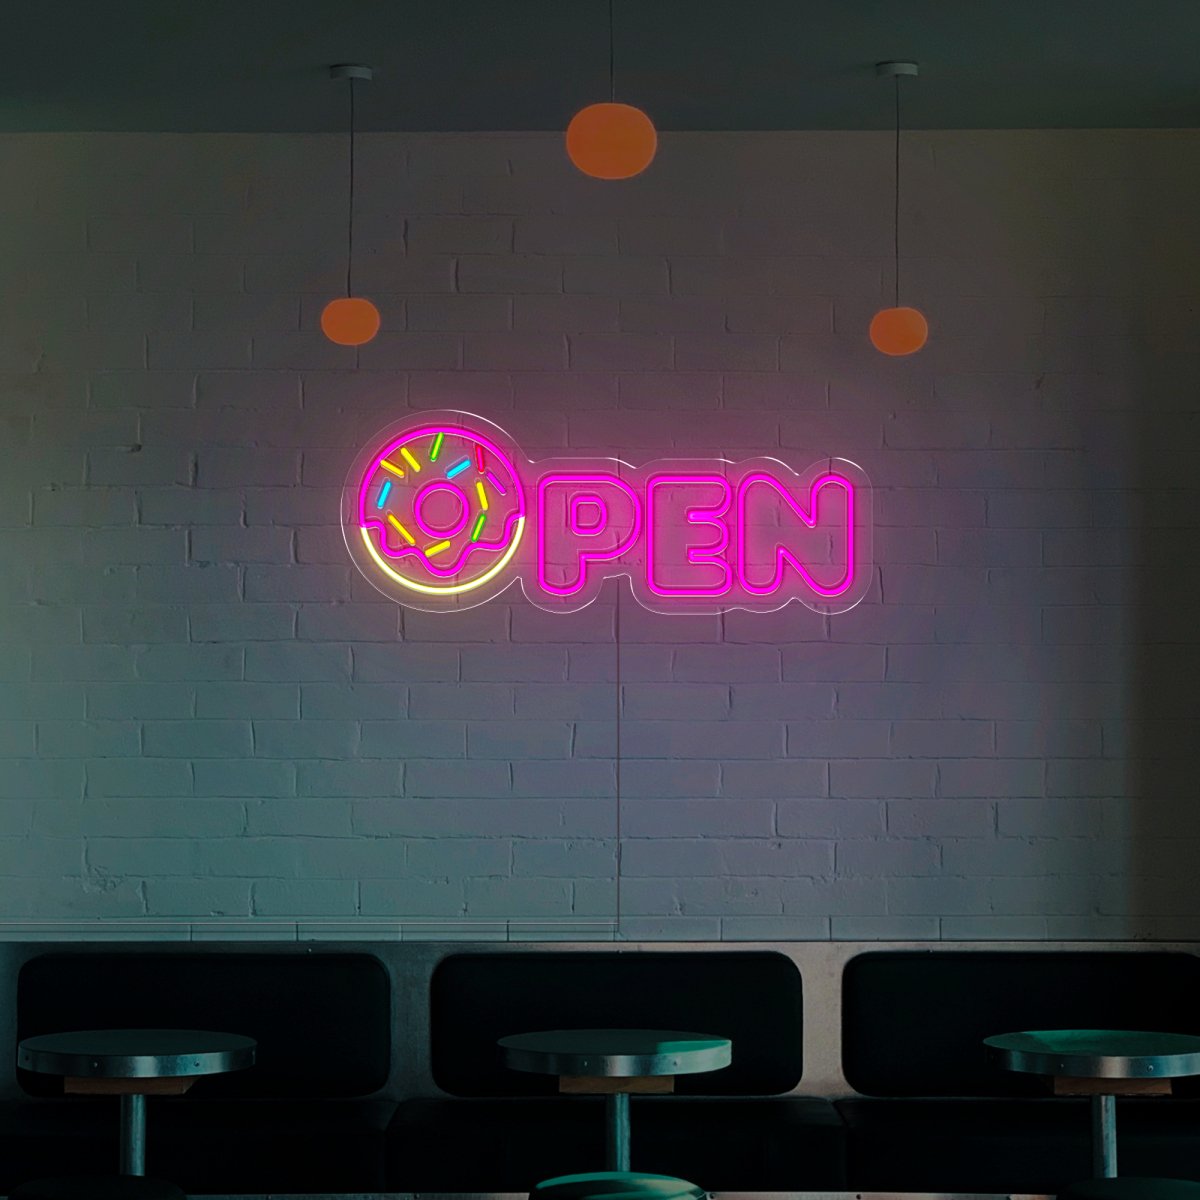 Donut Open Neon Sign - Reels Custom